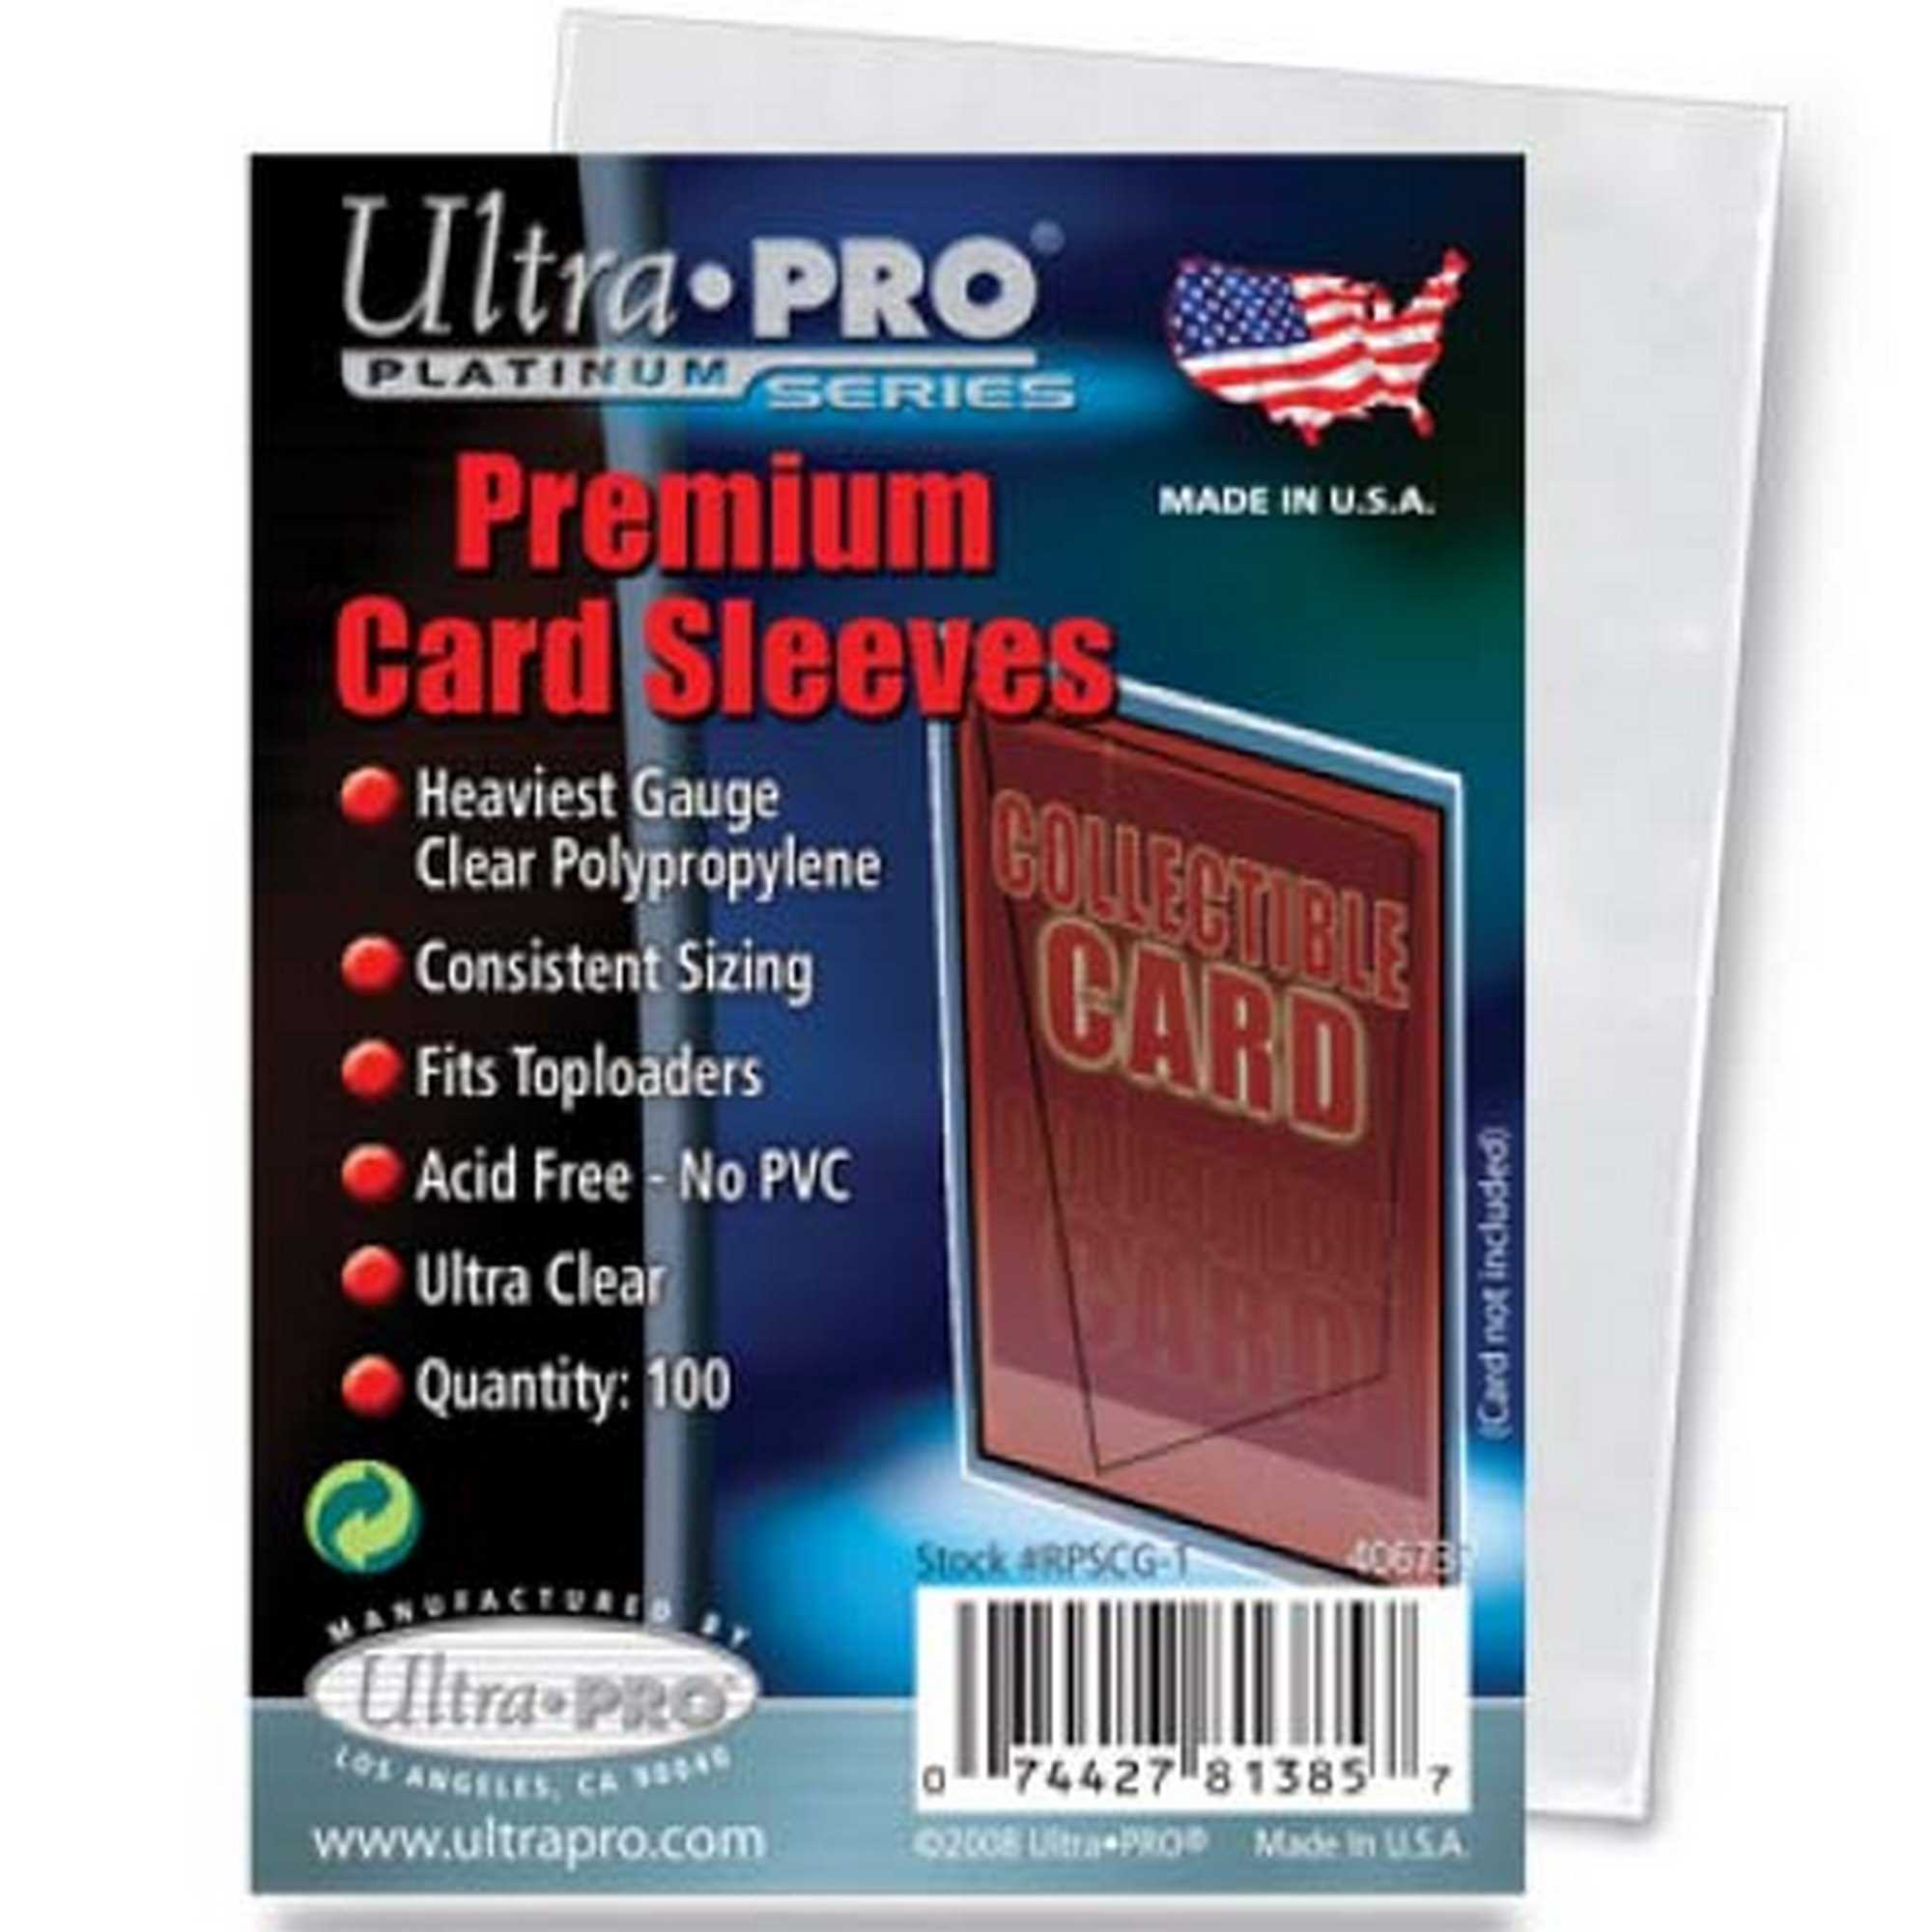 Ultra Pro Premium Card Sleeves (100ct)